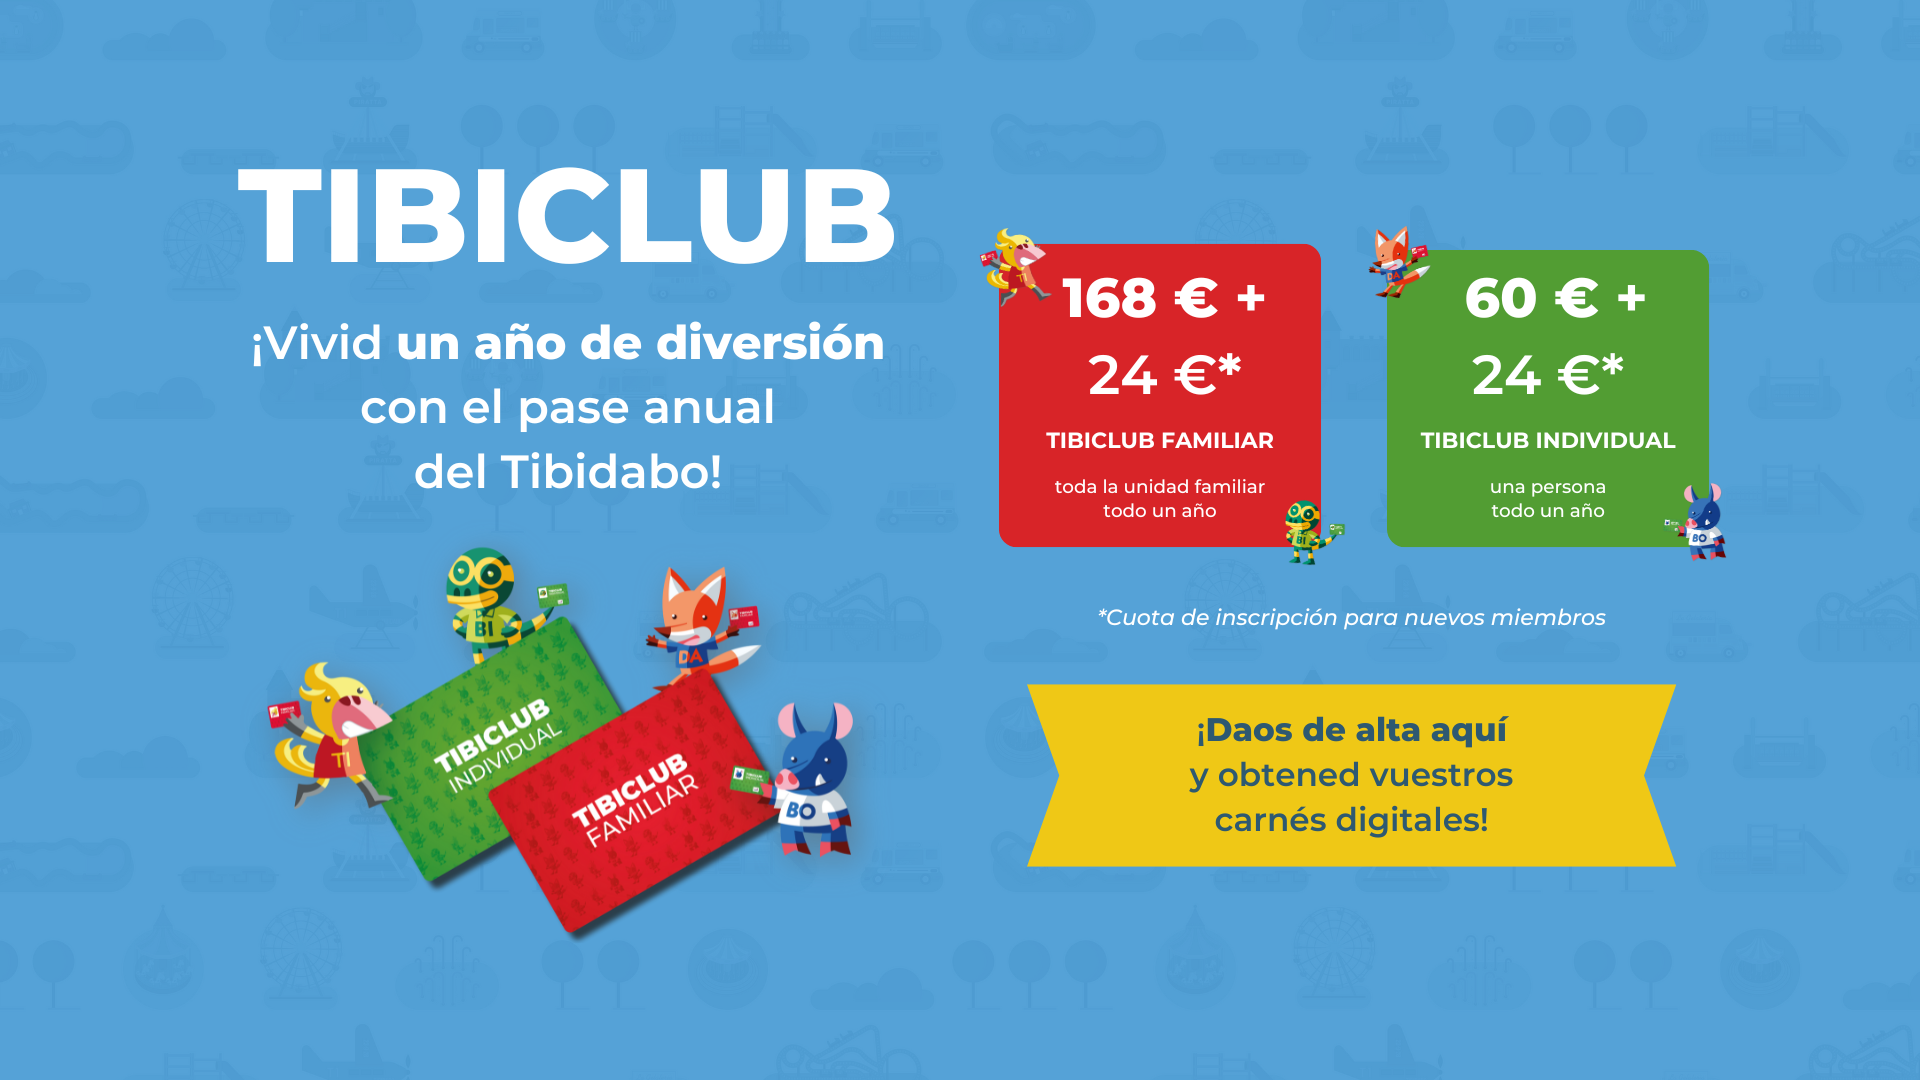 Tibidabo TibiClub